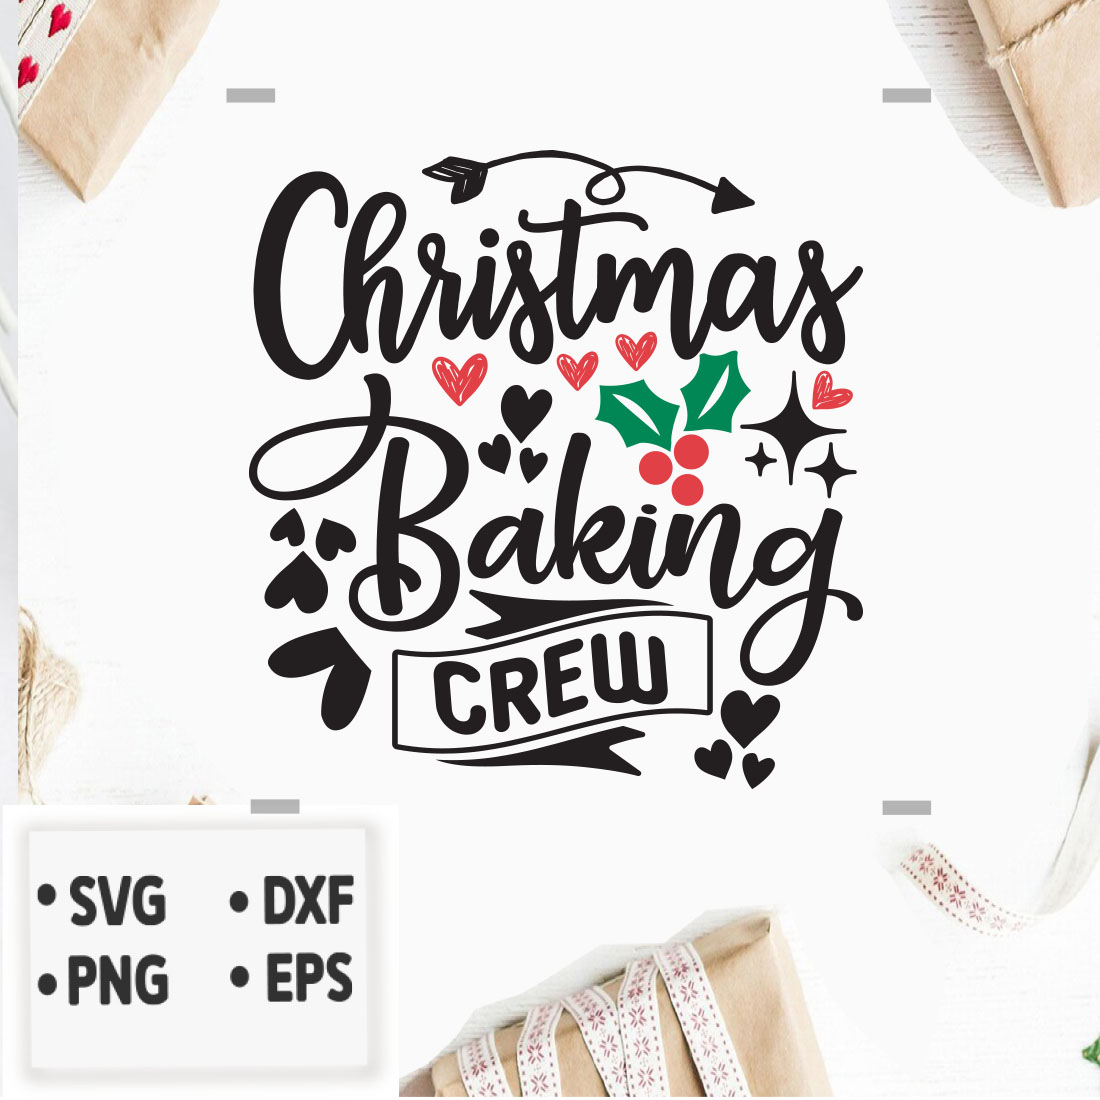 Image with irresistible Christmas Baking Crew caption.